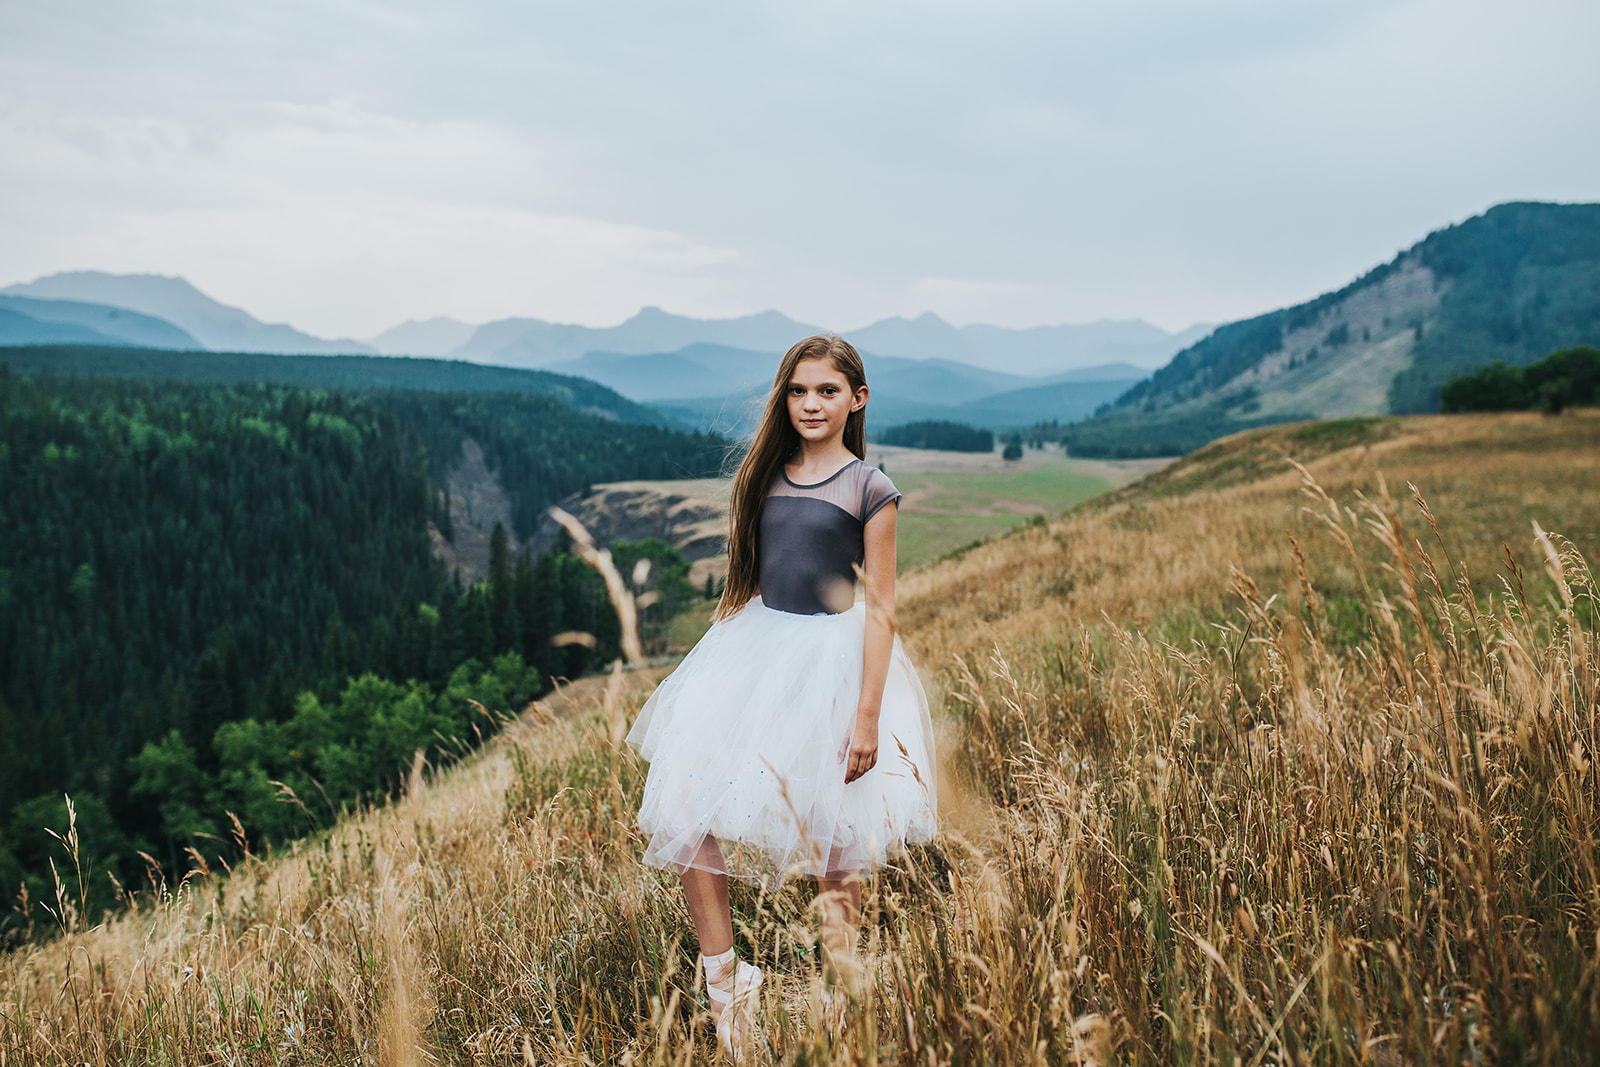 Calgary Portrait Photographer- Ballet Portrait In The Mountains